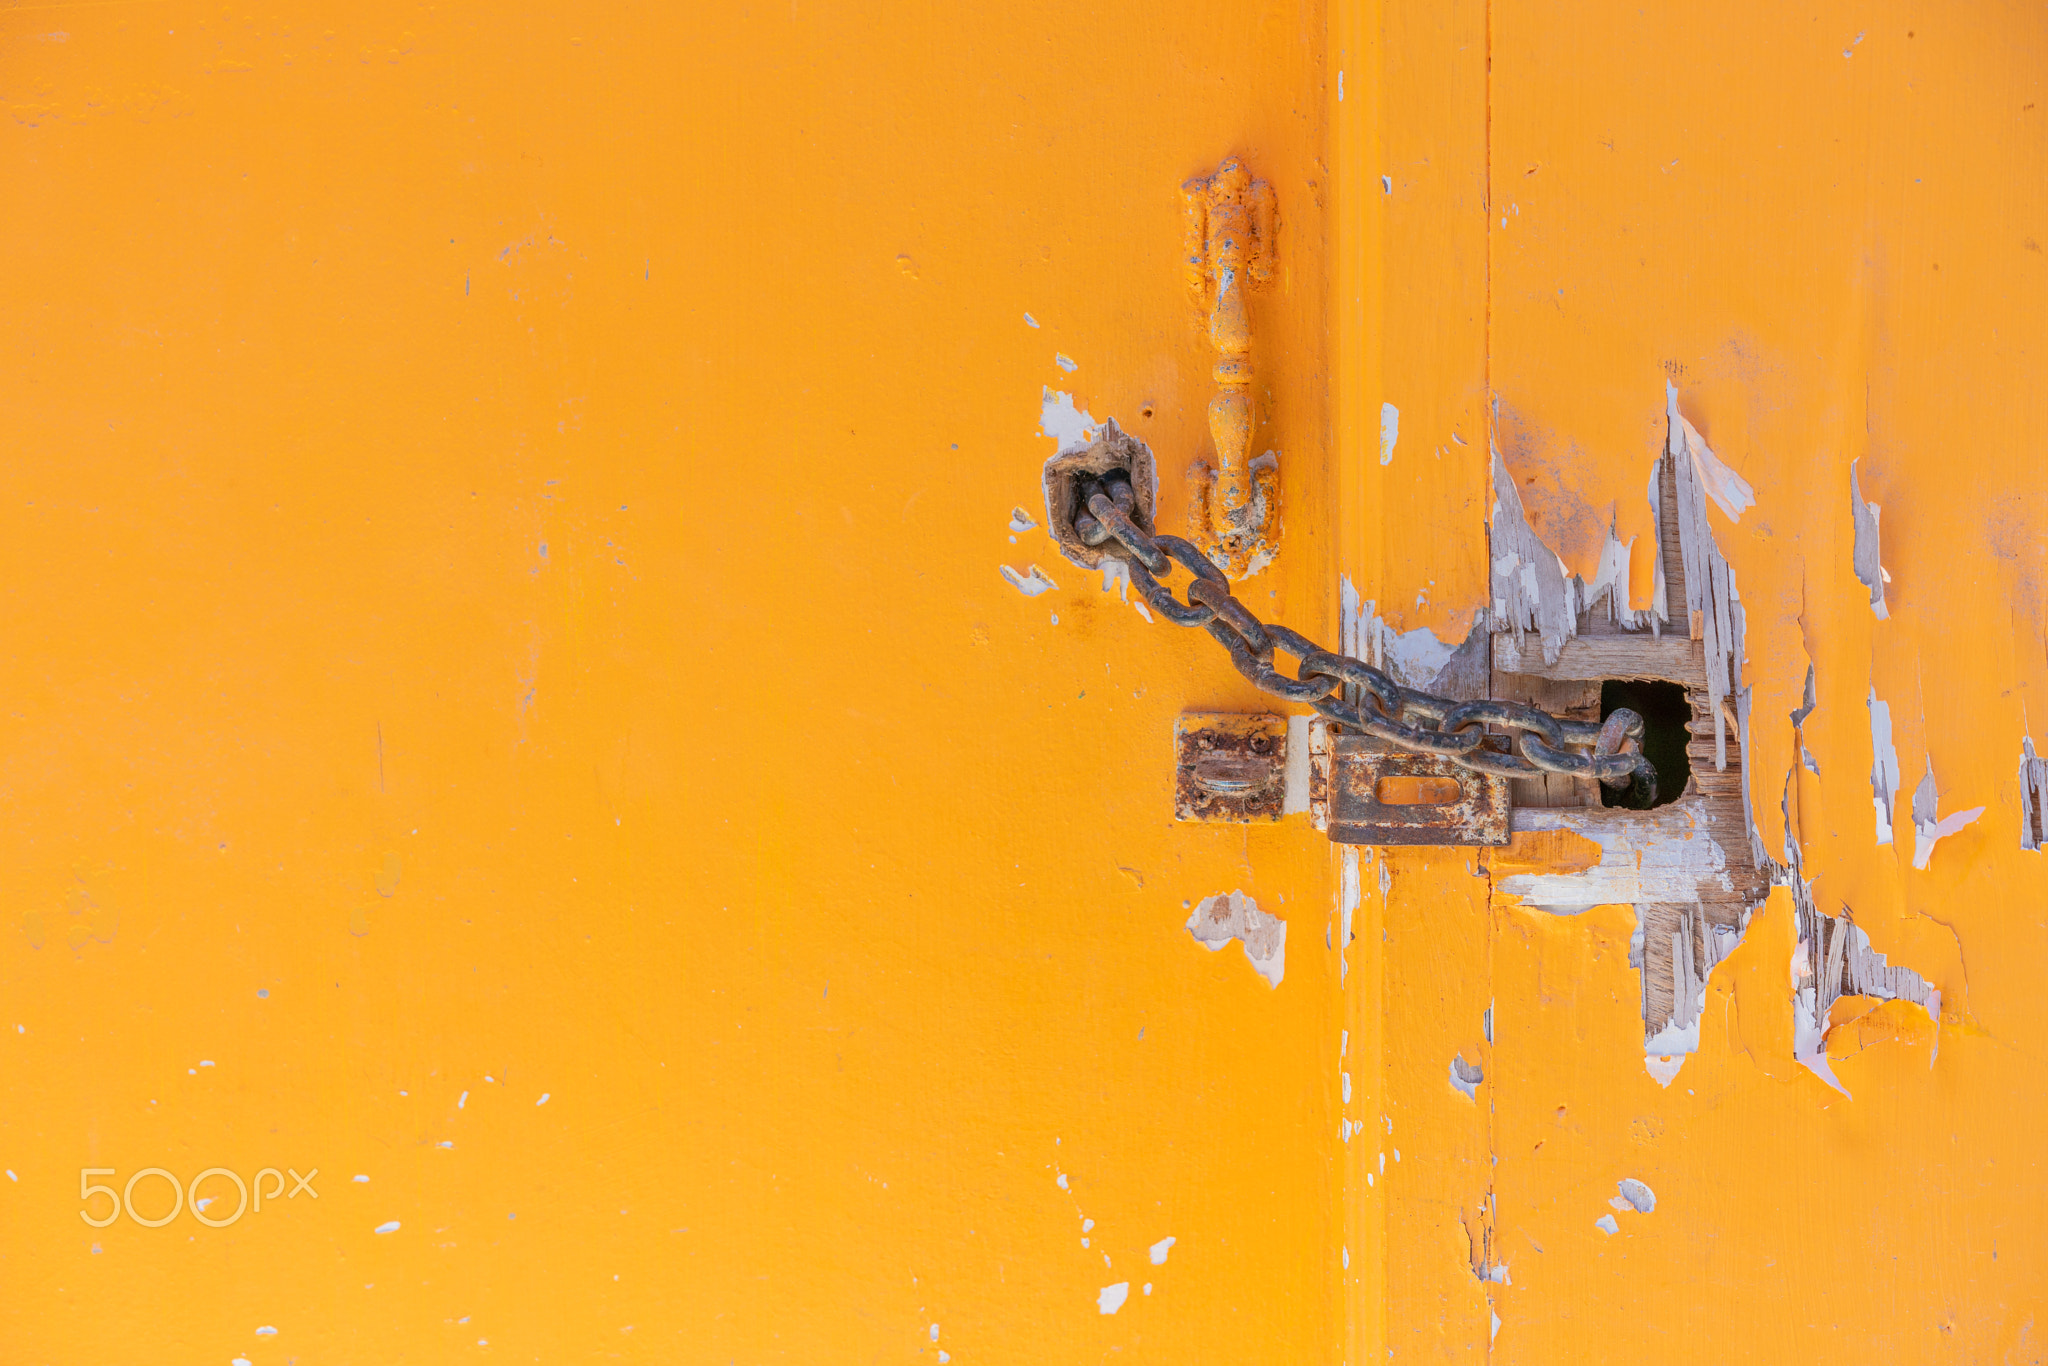 Rusty metal key with chain tie and lock on yellow wooden door